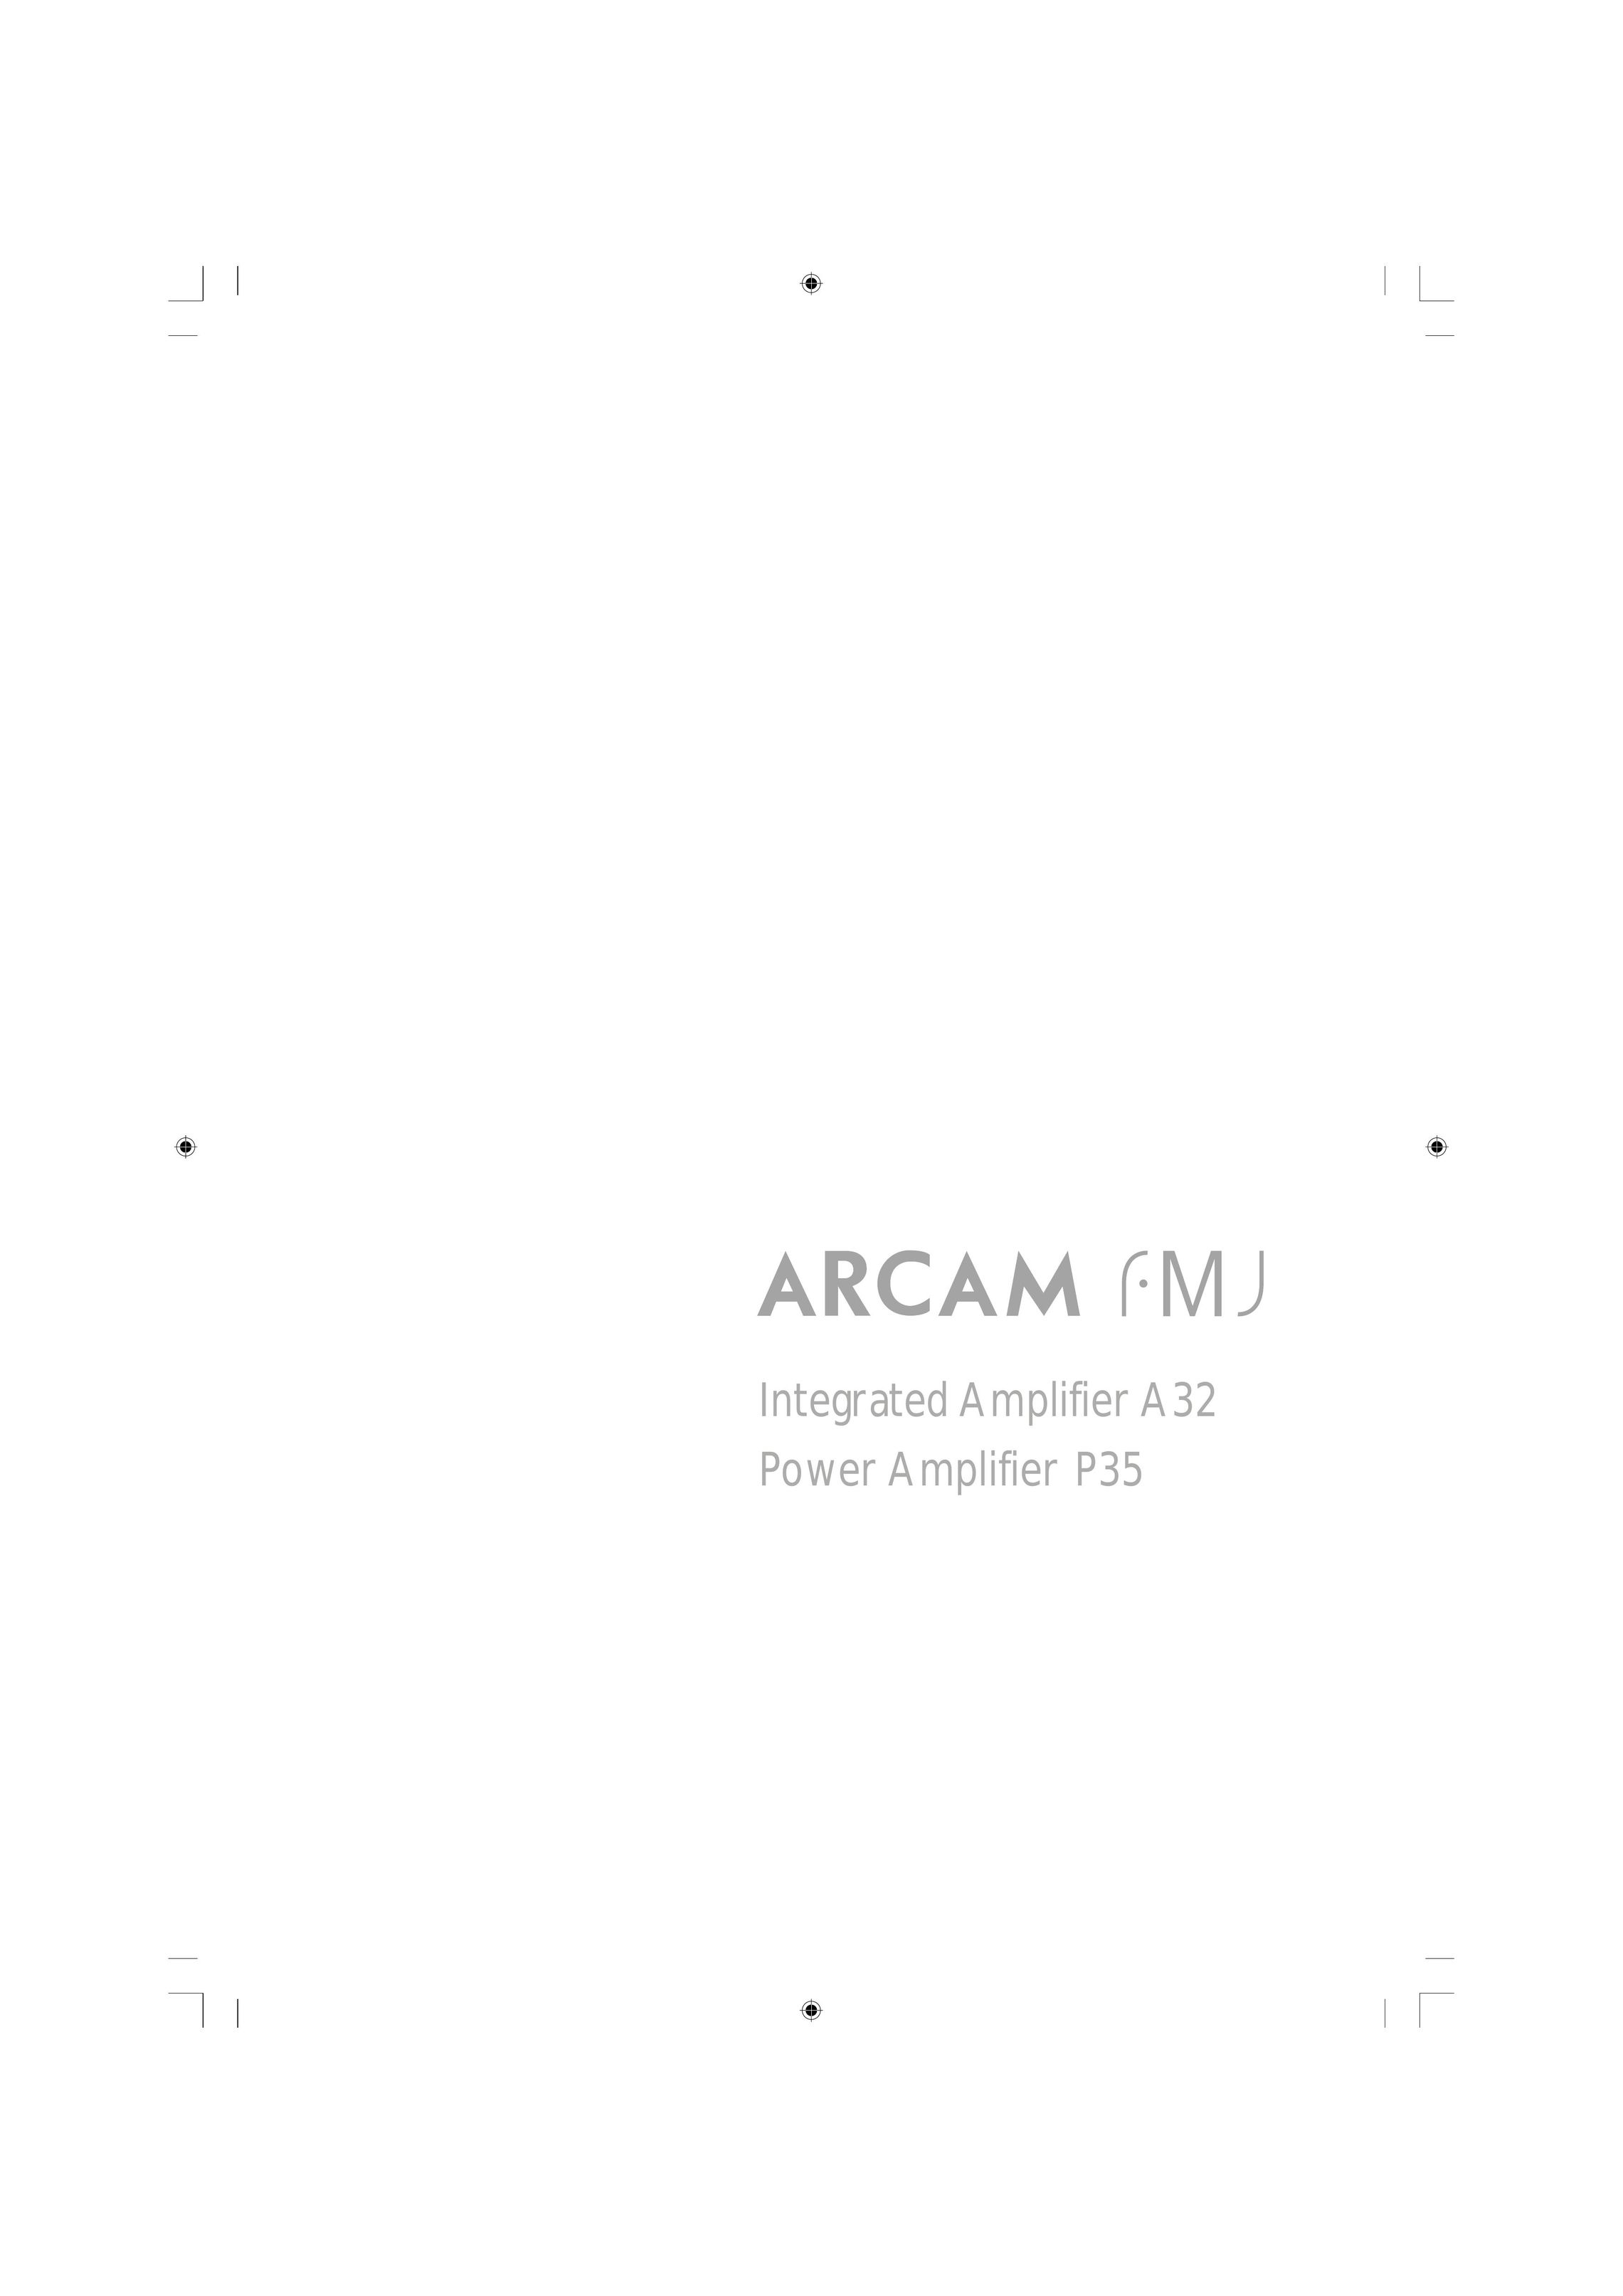 Arcam A32 Car Amplifier User Manual (Page 1)